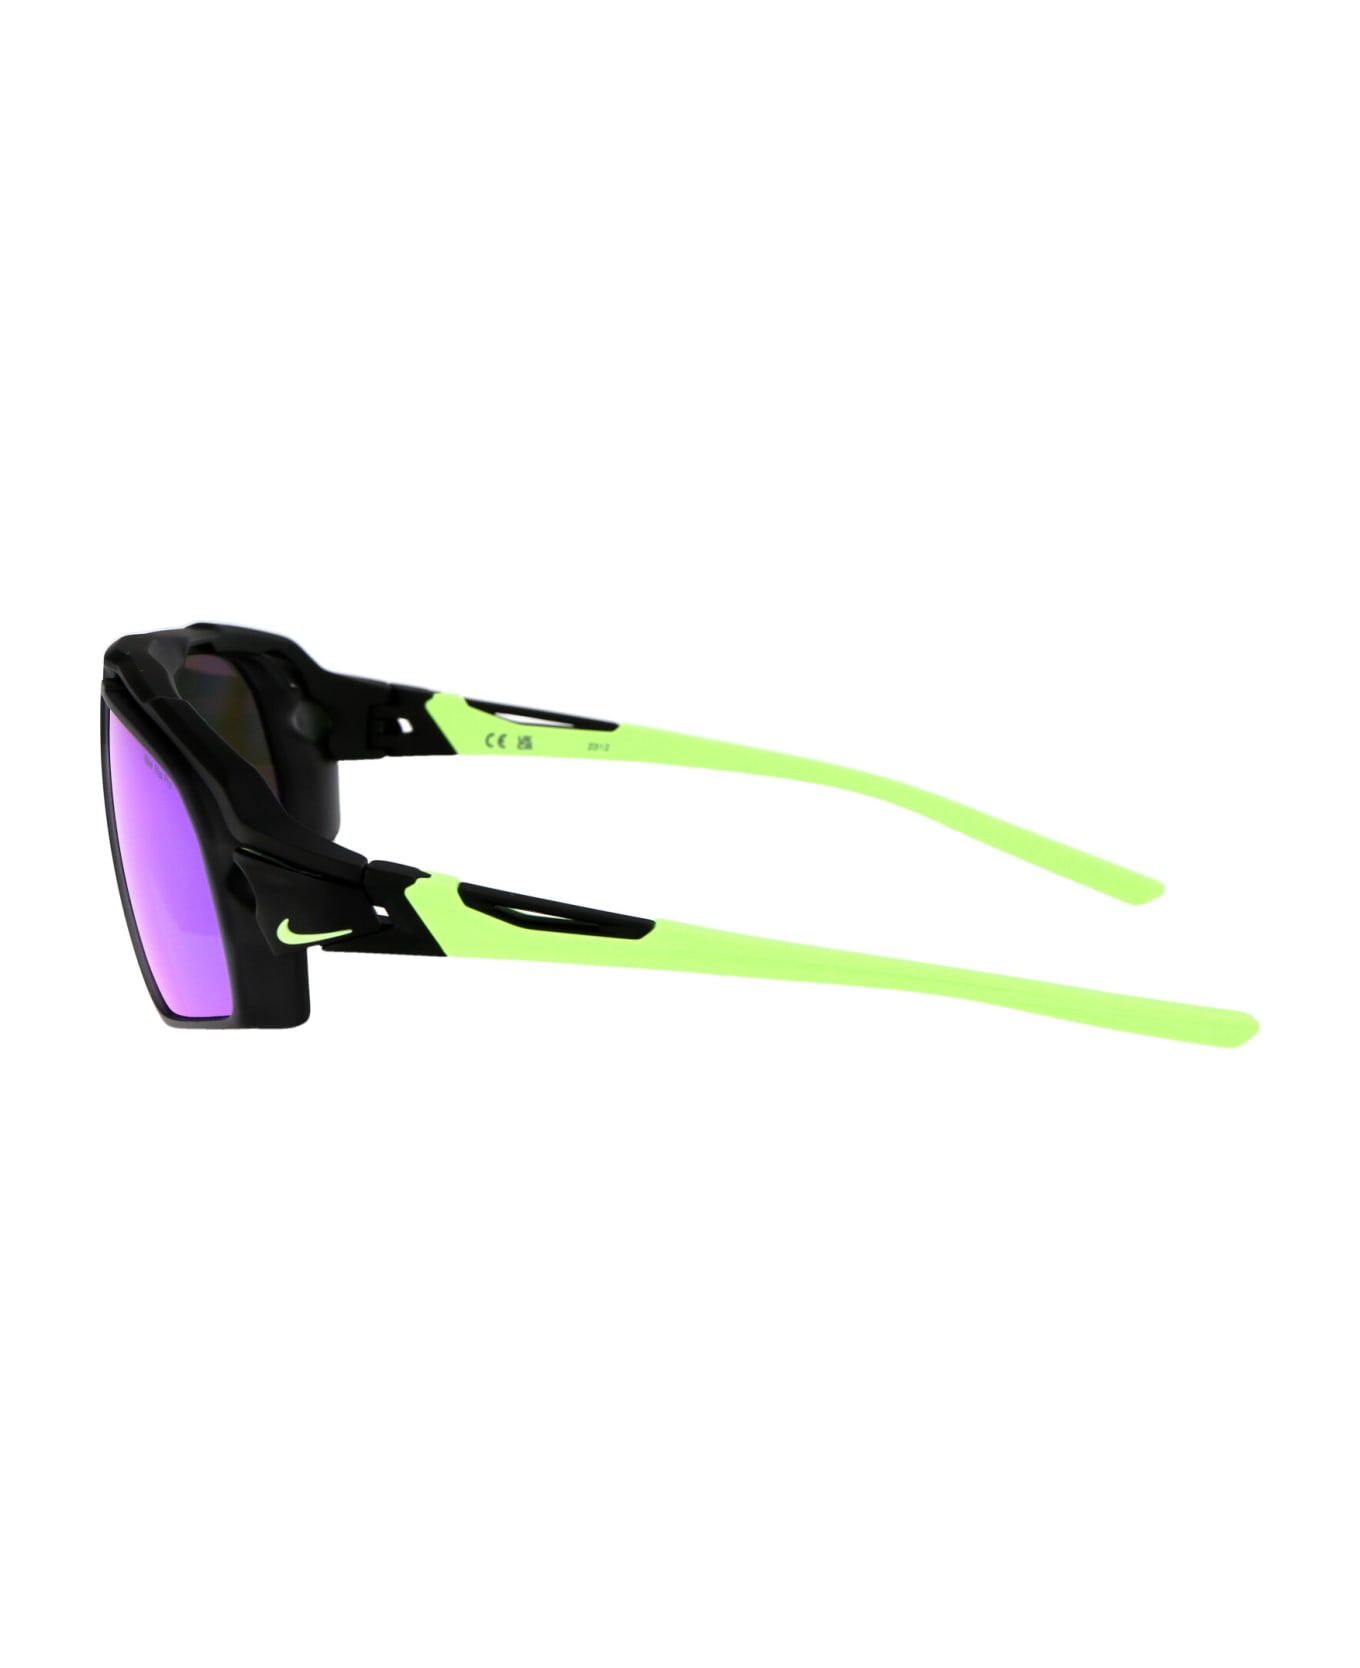 Nike Flyfree M Sunglasses - 010 GREY W/ GREEN MIRROR MATTE BLACK